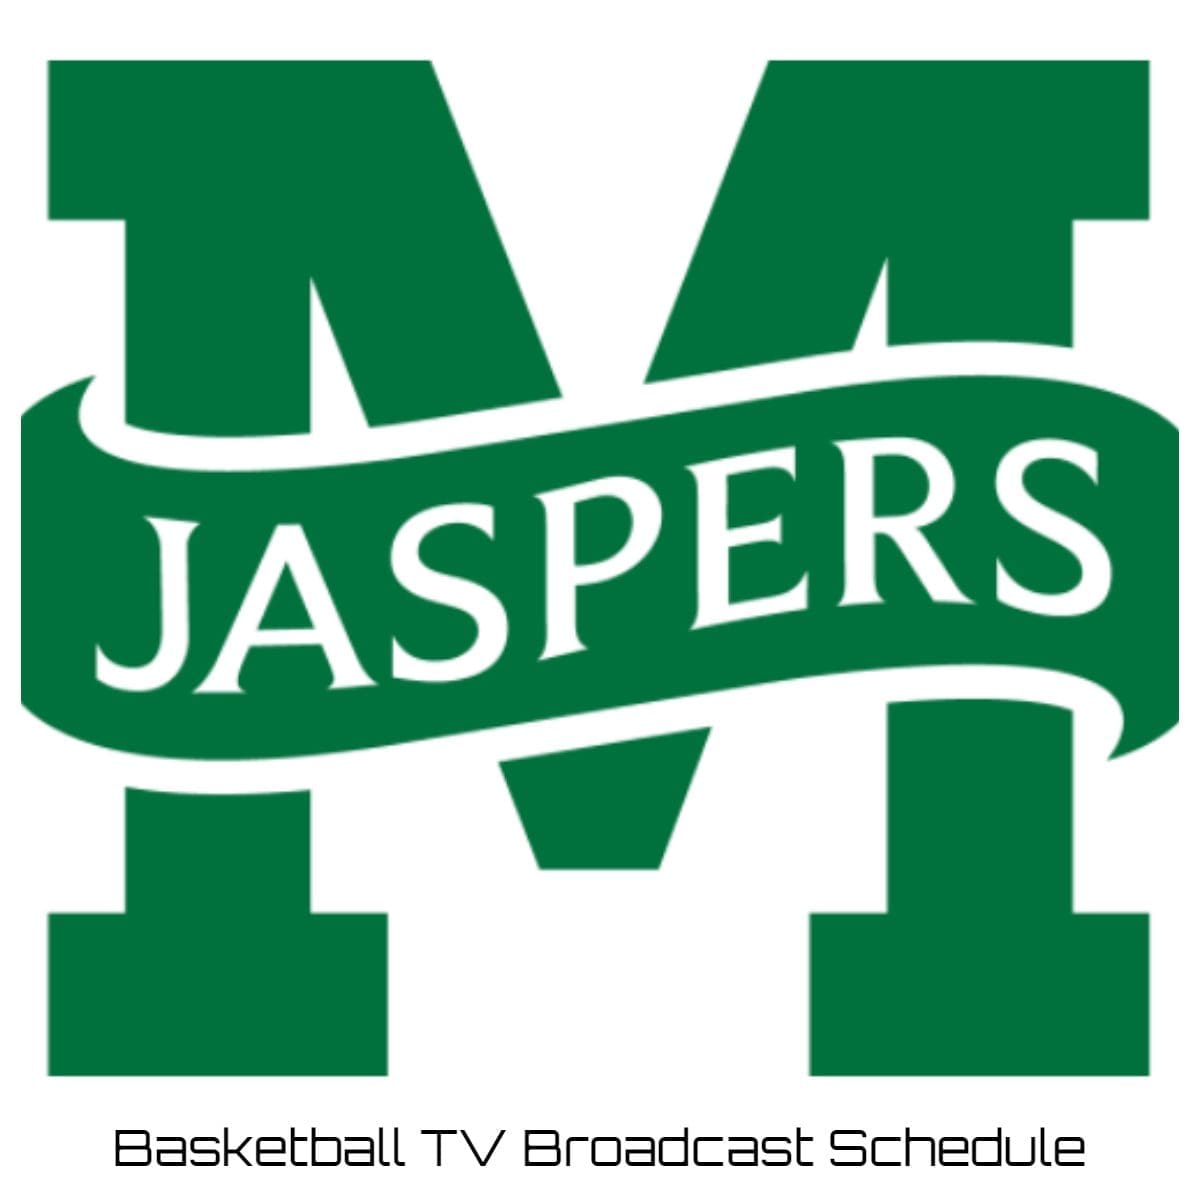 Manhattan Jaspers Basketball TV Broadcast Schedule